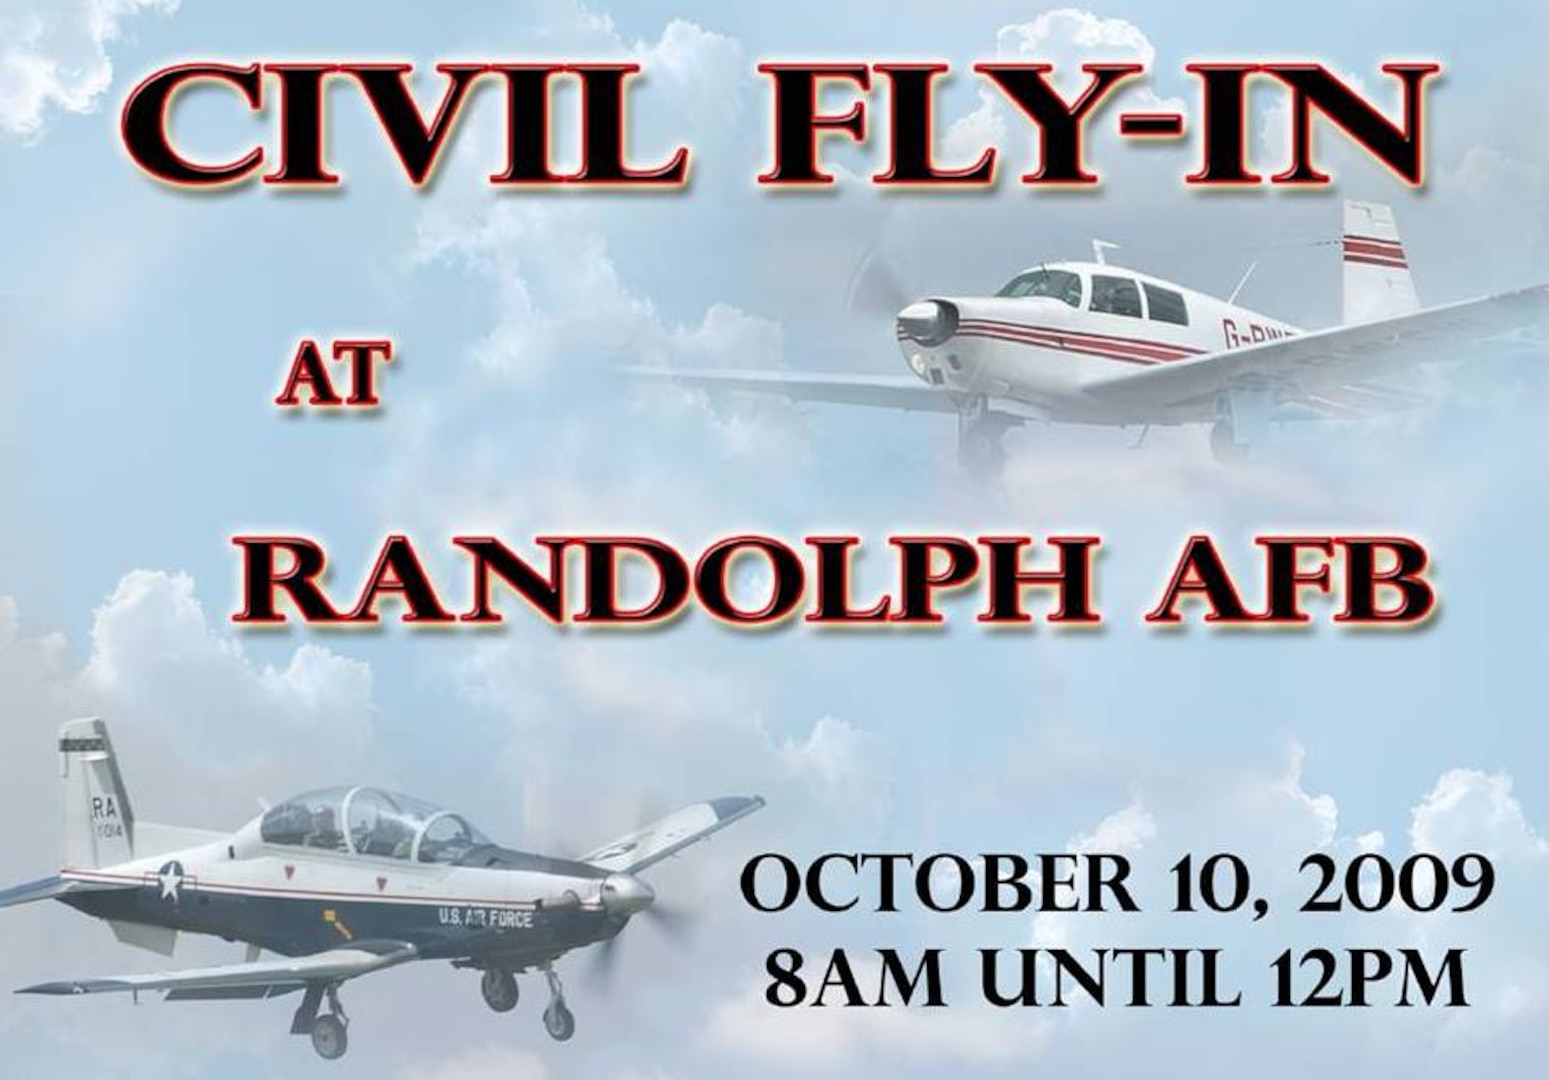 Randolph seeks general aviators for Civil FlyIn > Joint Base San